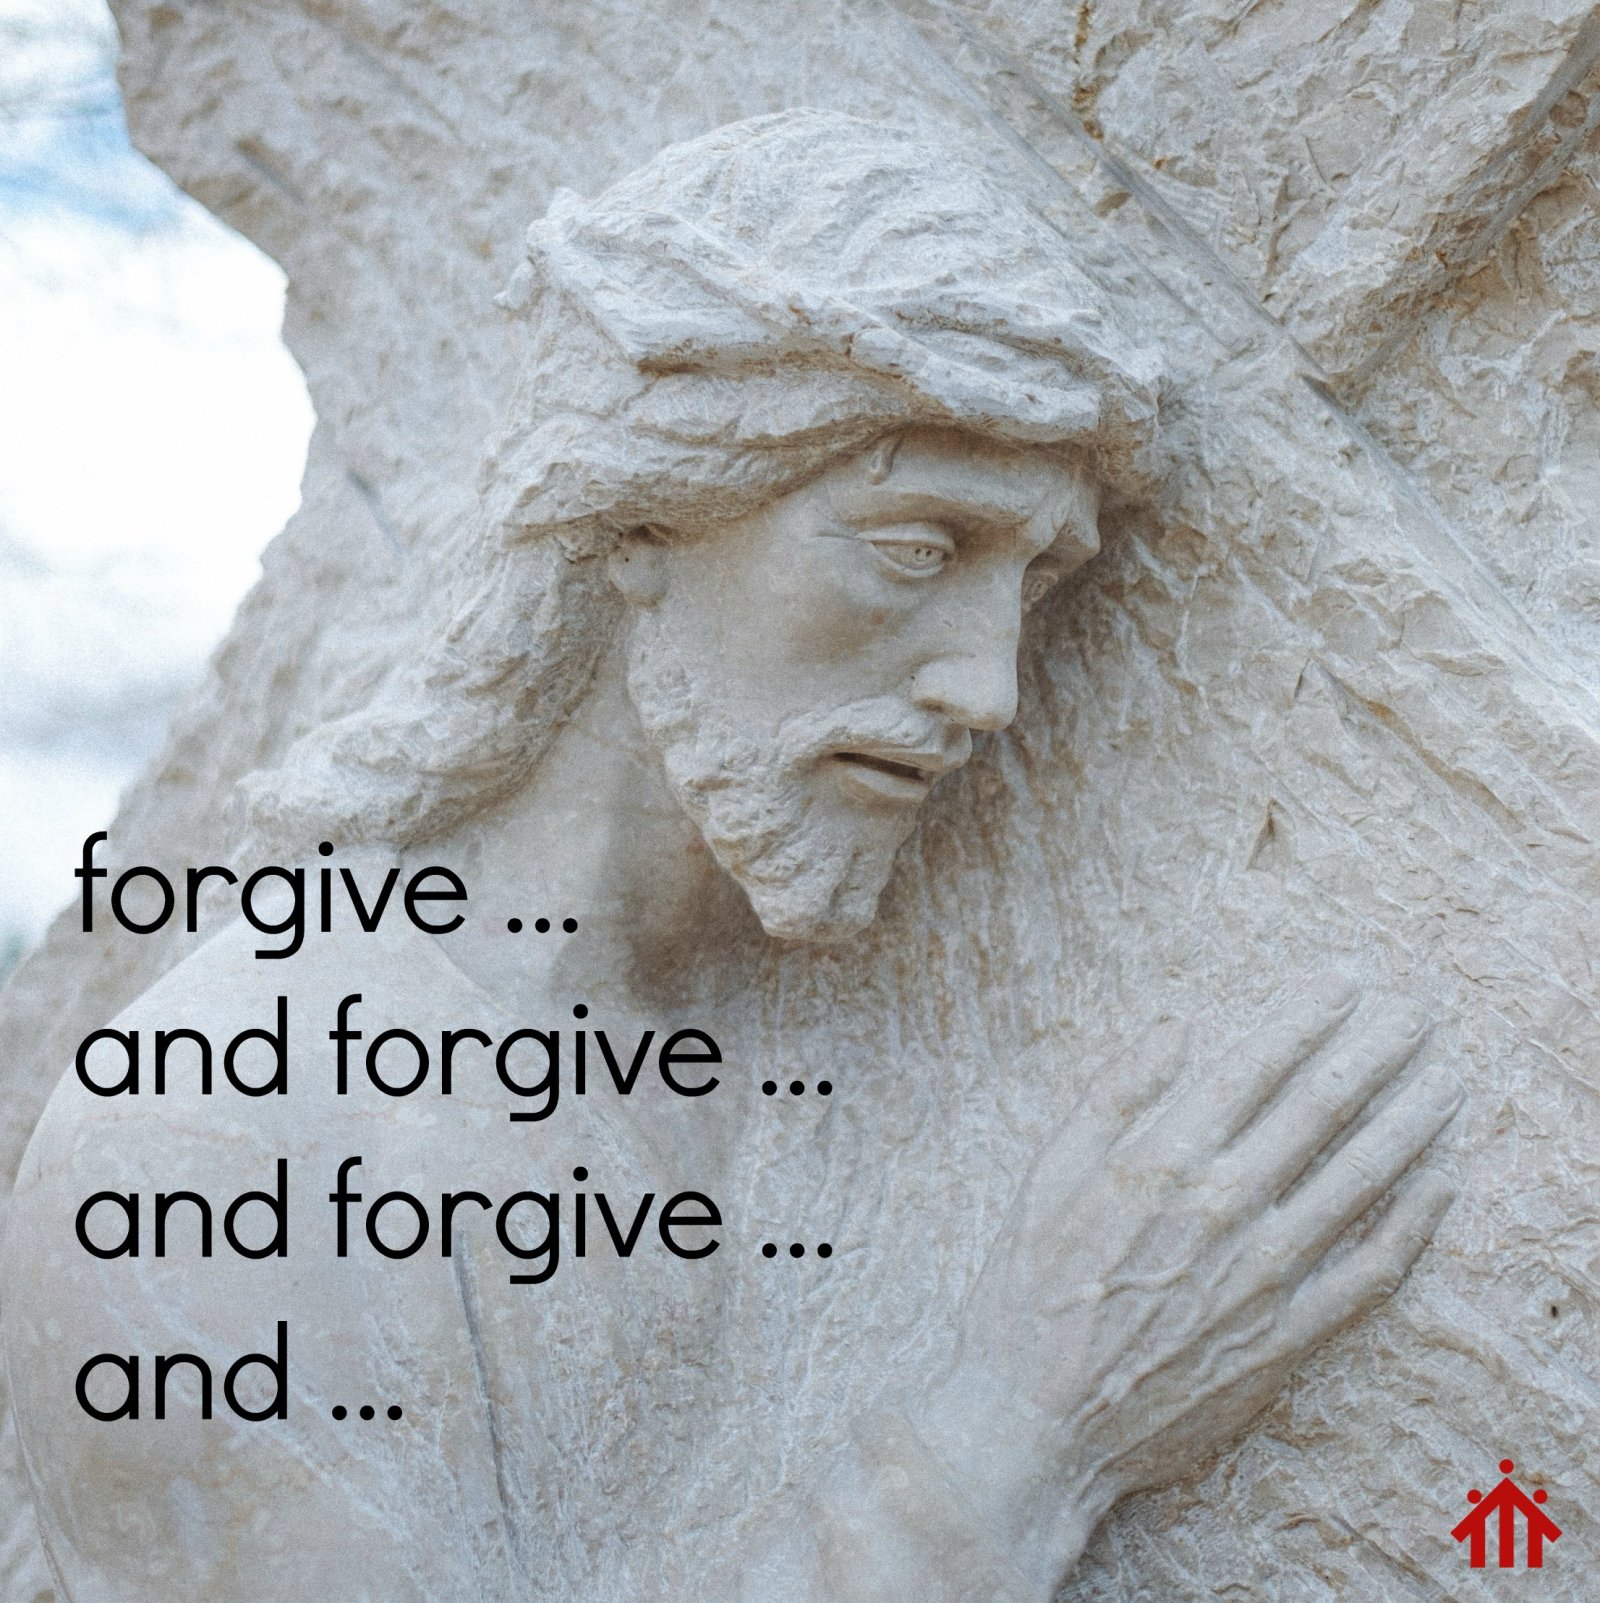 True forgiveness brings the spirit of reconciliation